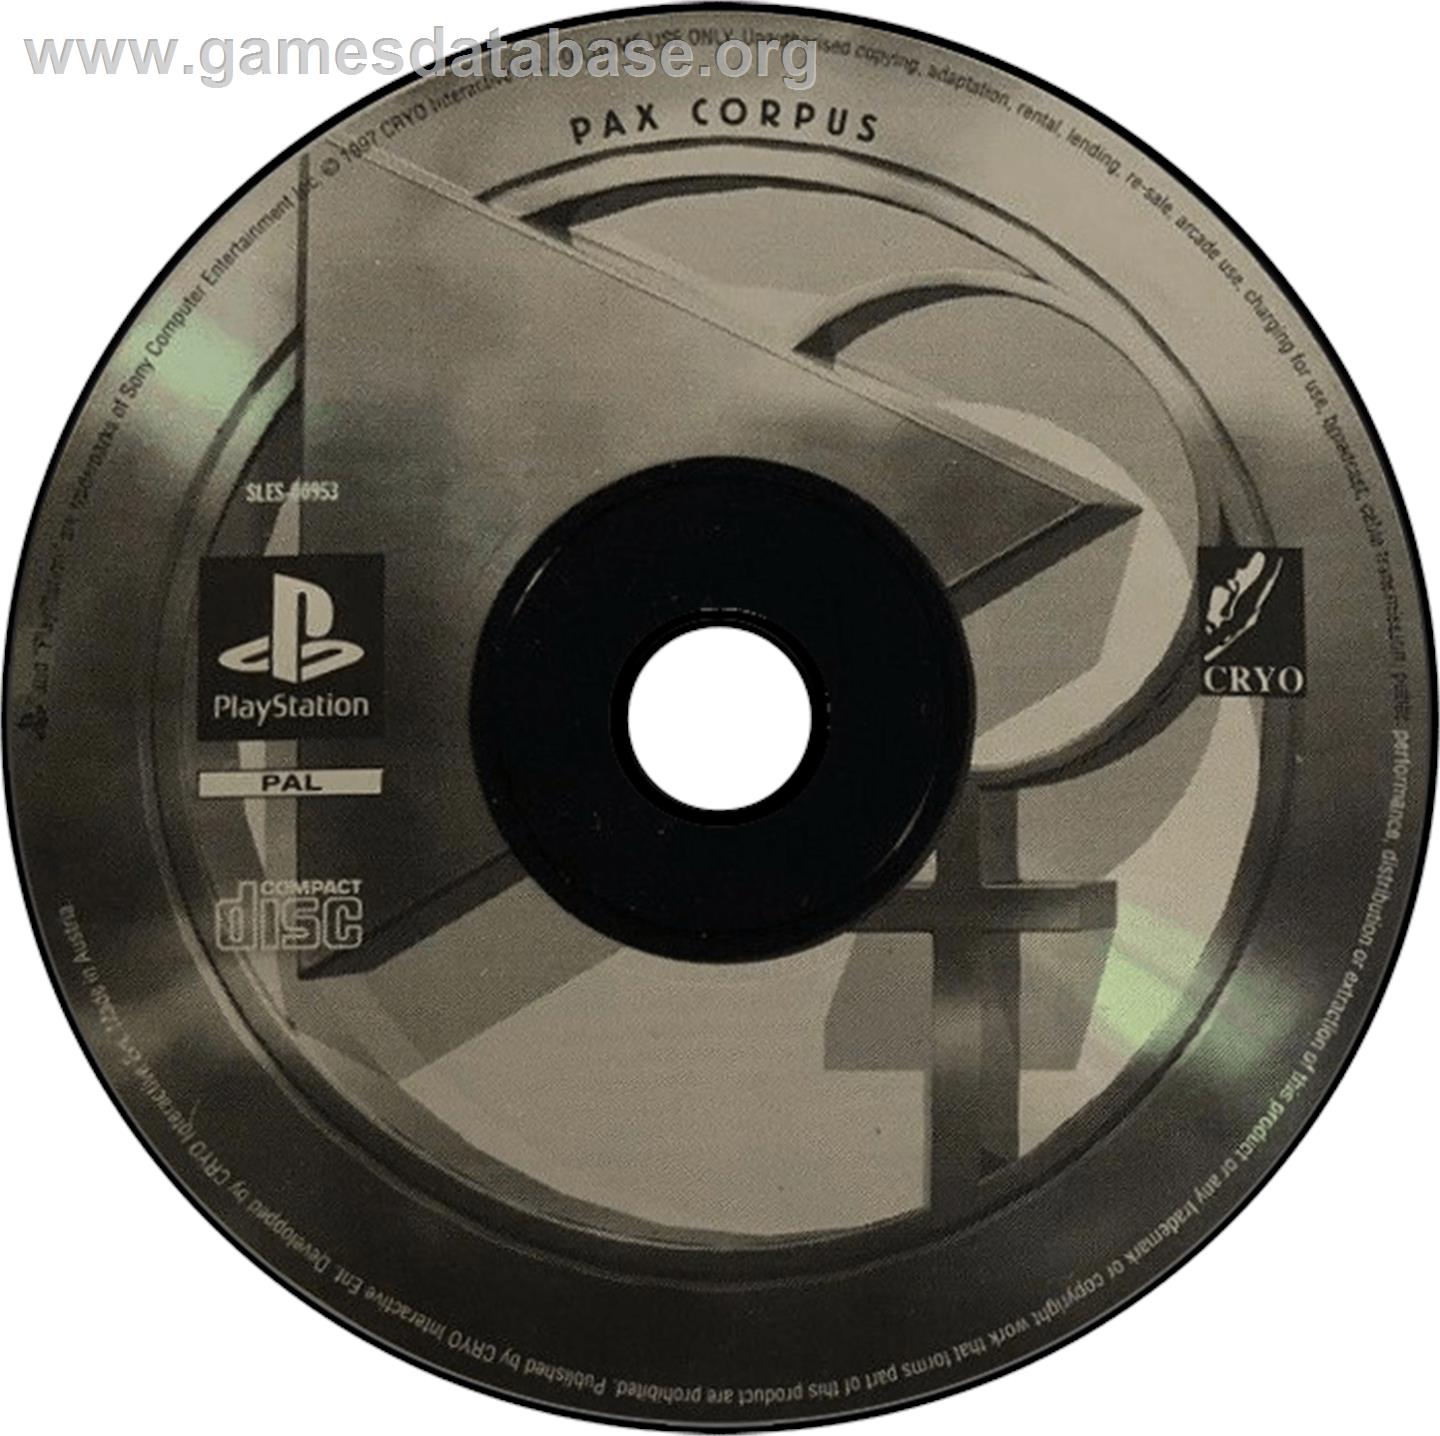 Pax Corpus - Sony Playstation - Artwork - Disc